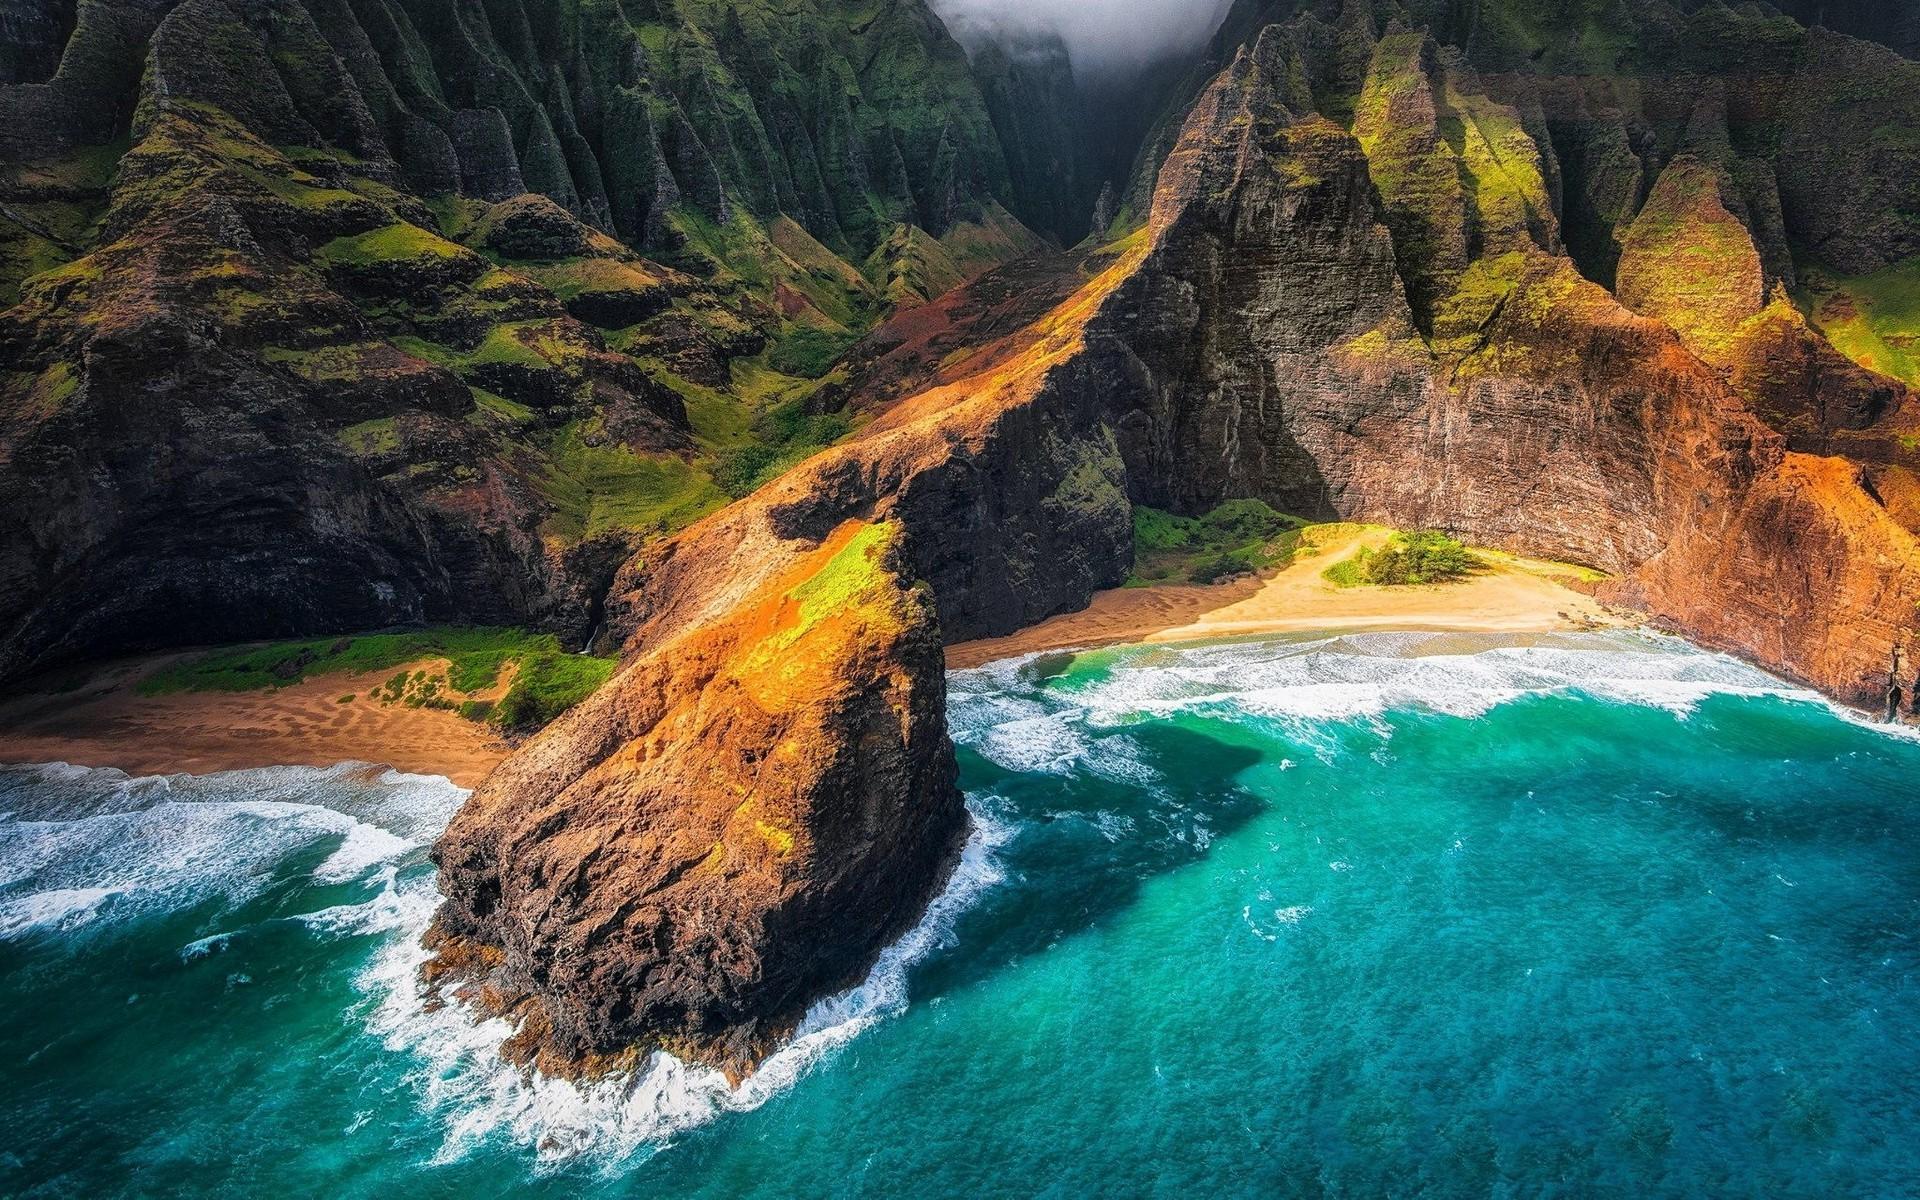 Hawaii Beach Picture Wallpaper